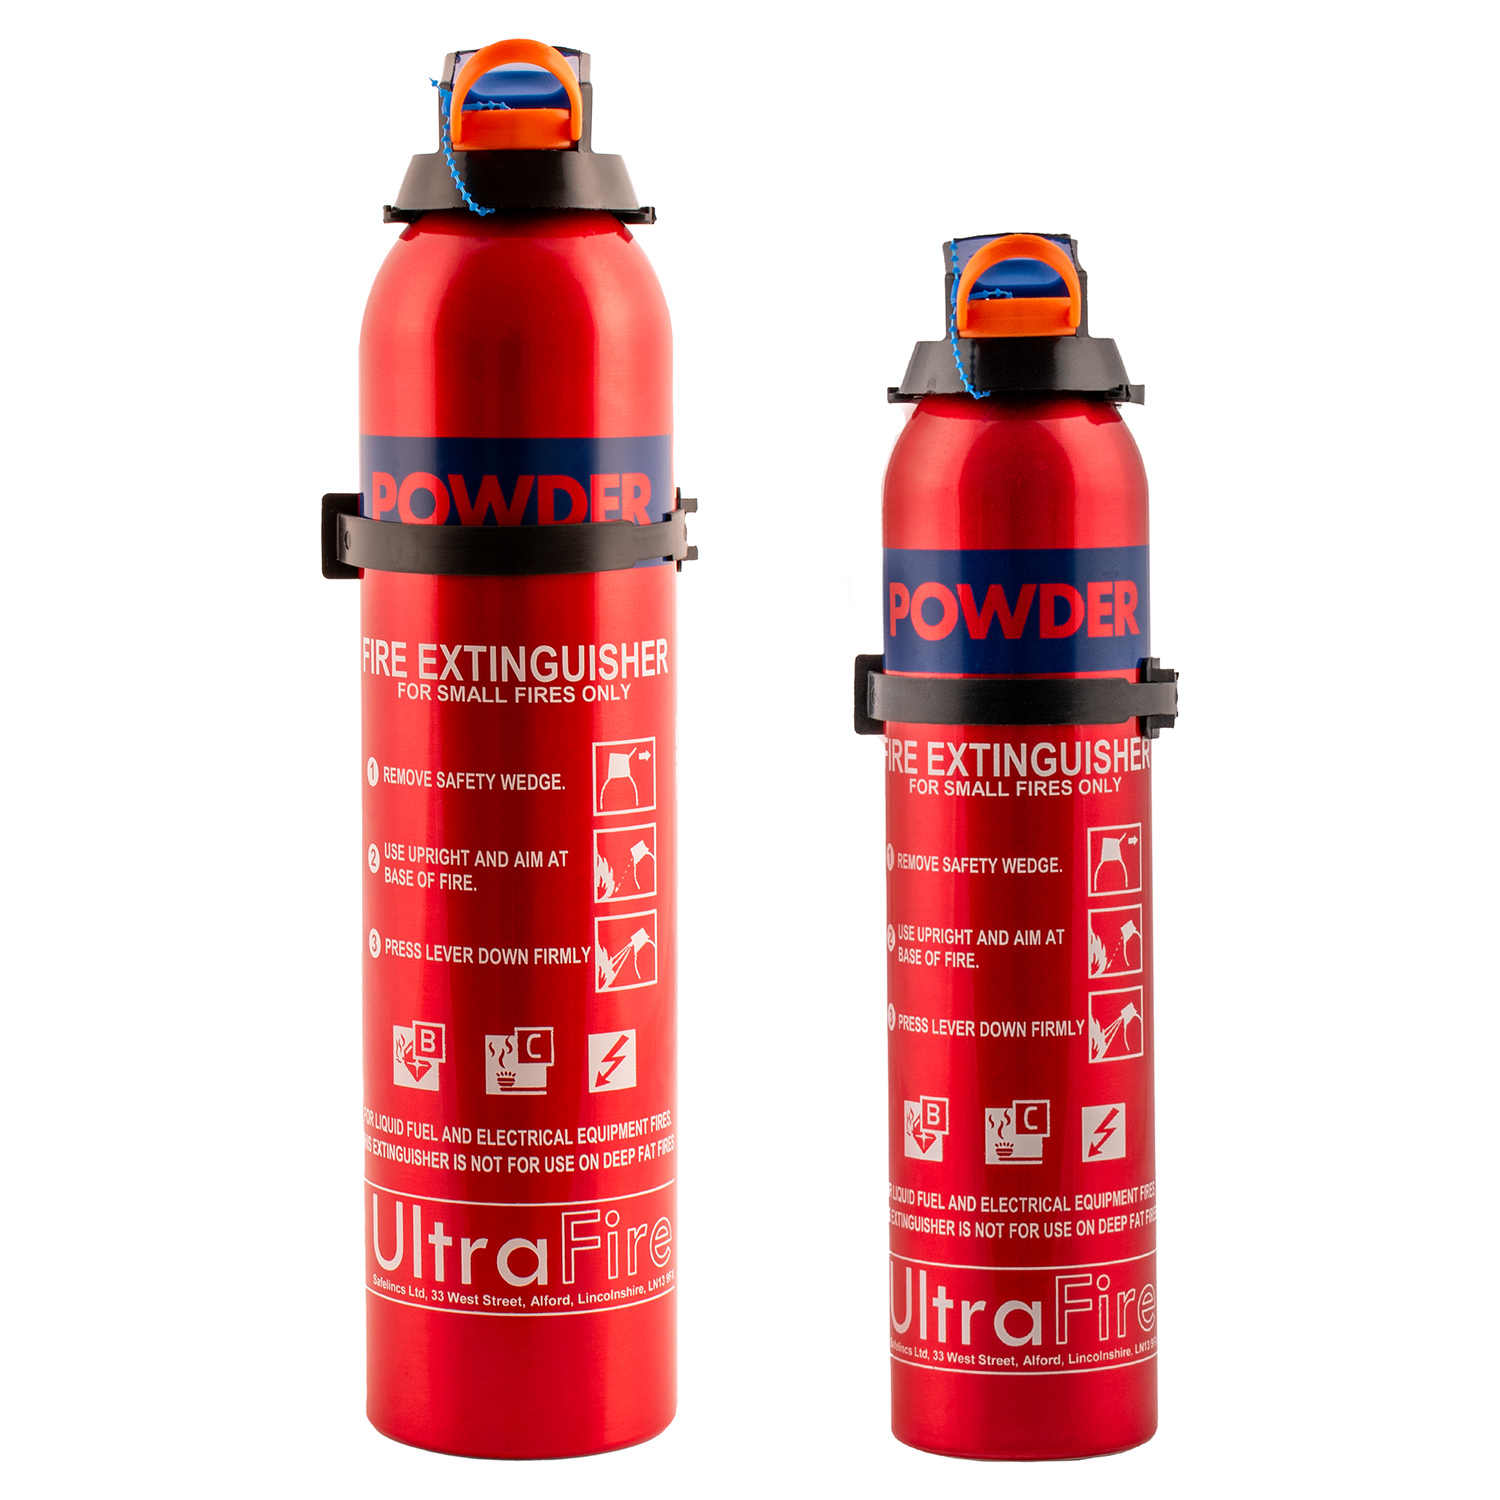 600g & 950g Powder Fire Extinguishers - UltraFire